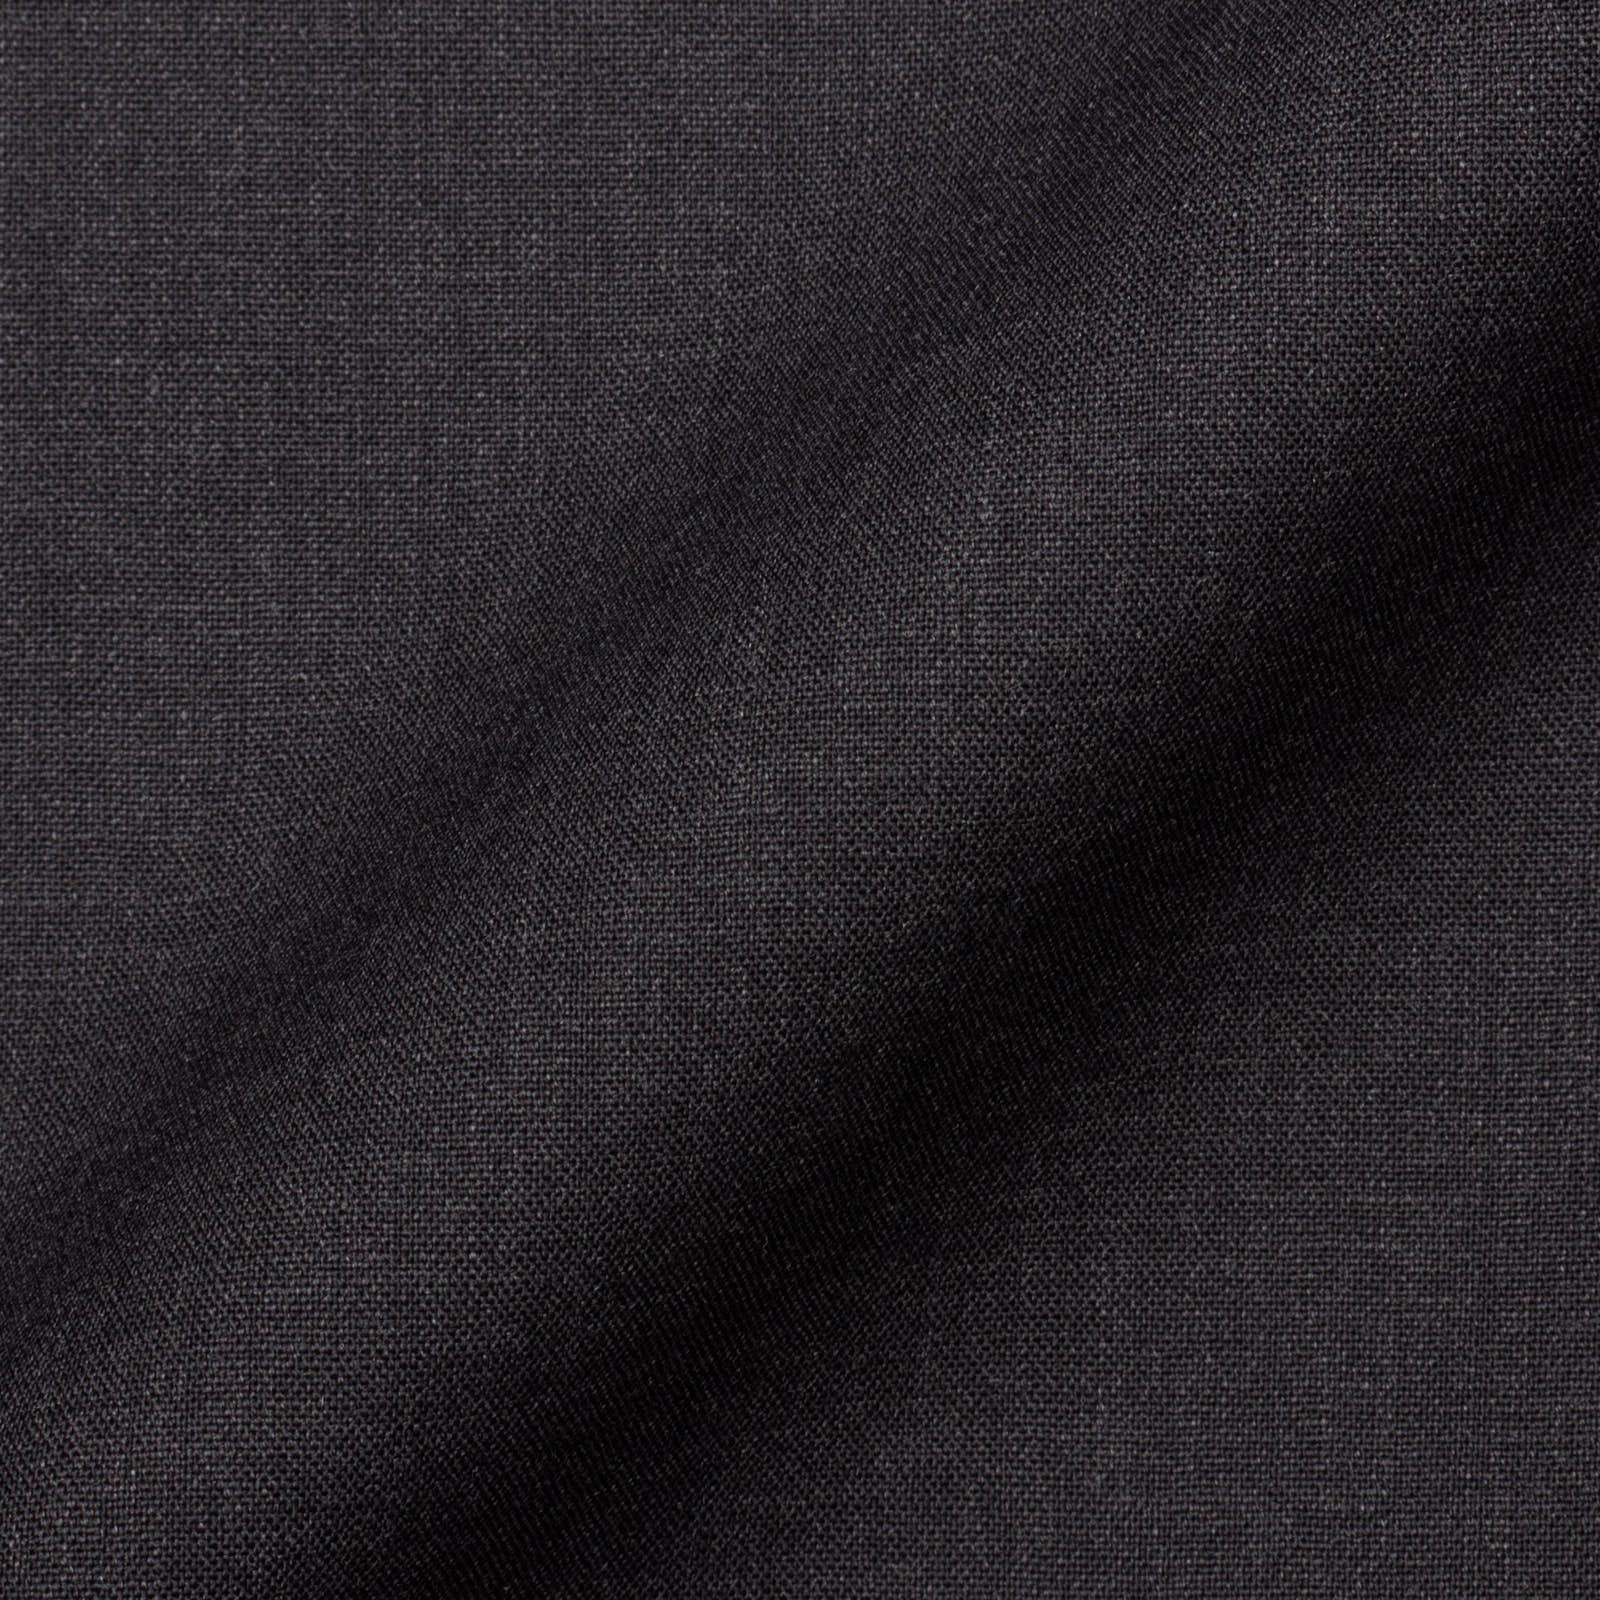 SARTORIA PARTENOPEA for VANNUCCI Gray Wool S150's Handmade Suit EU 54 NEW US 44